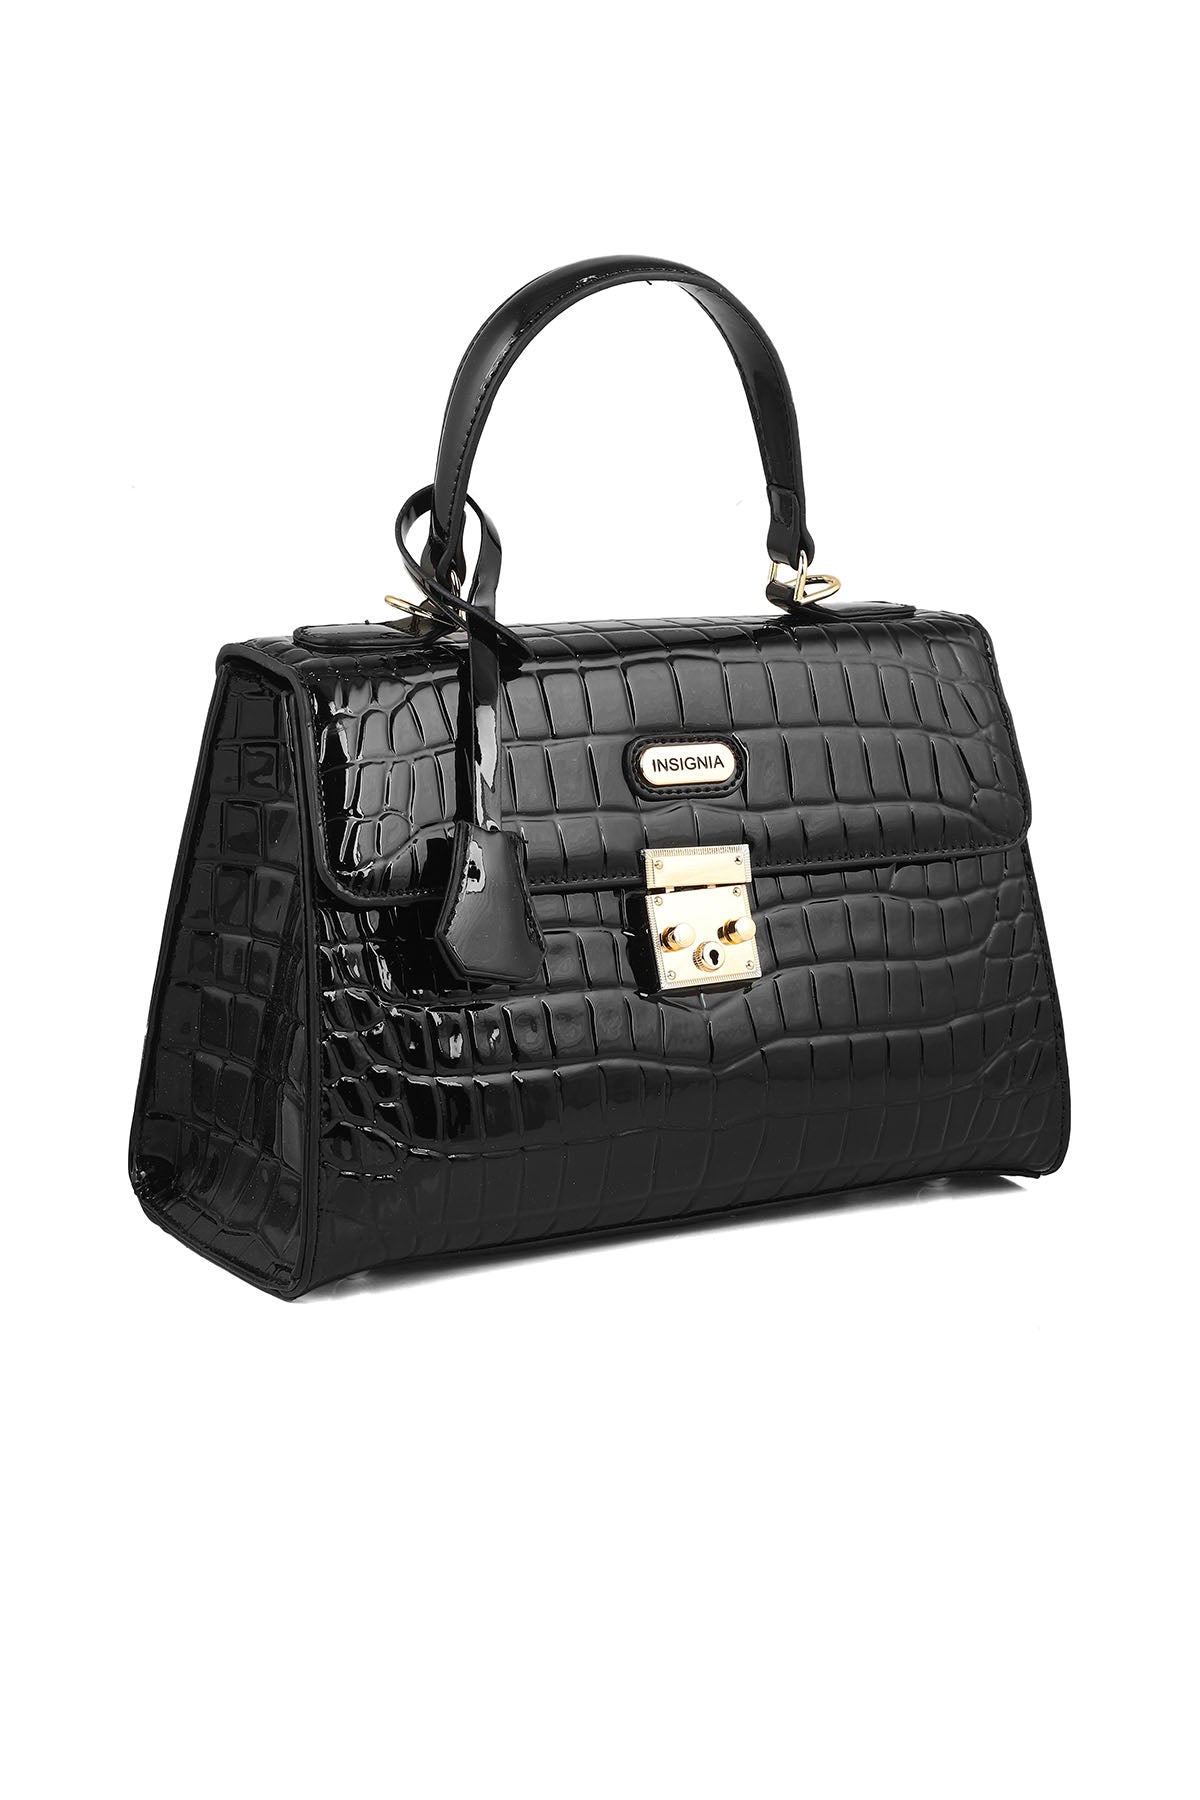 Top Handle Hand Bags B15090-Black